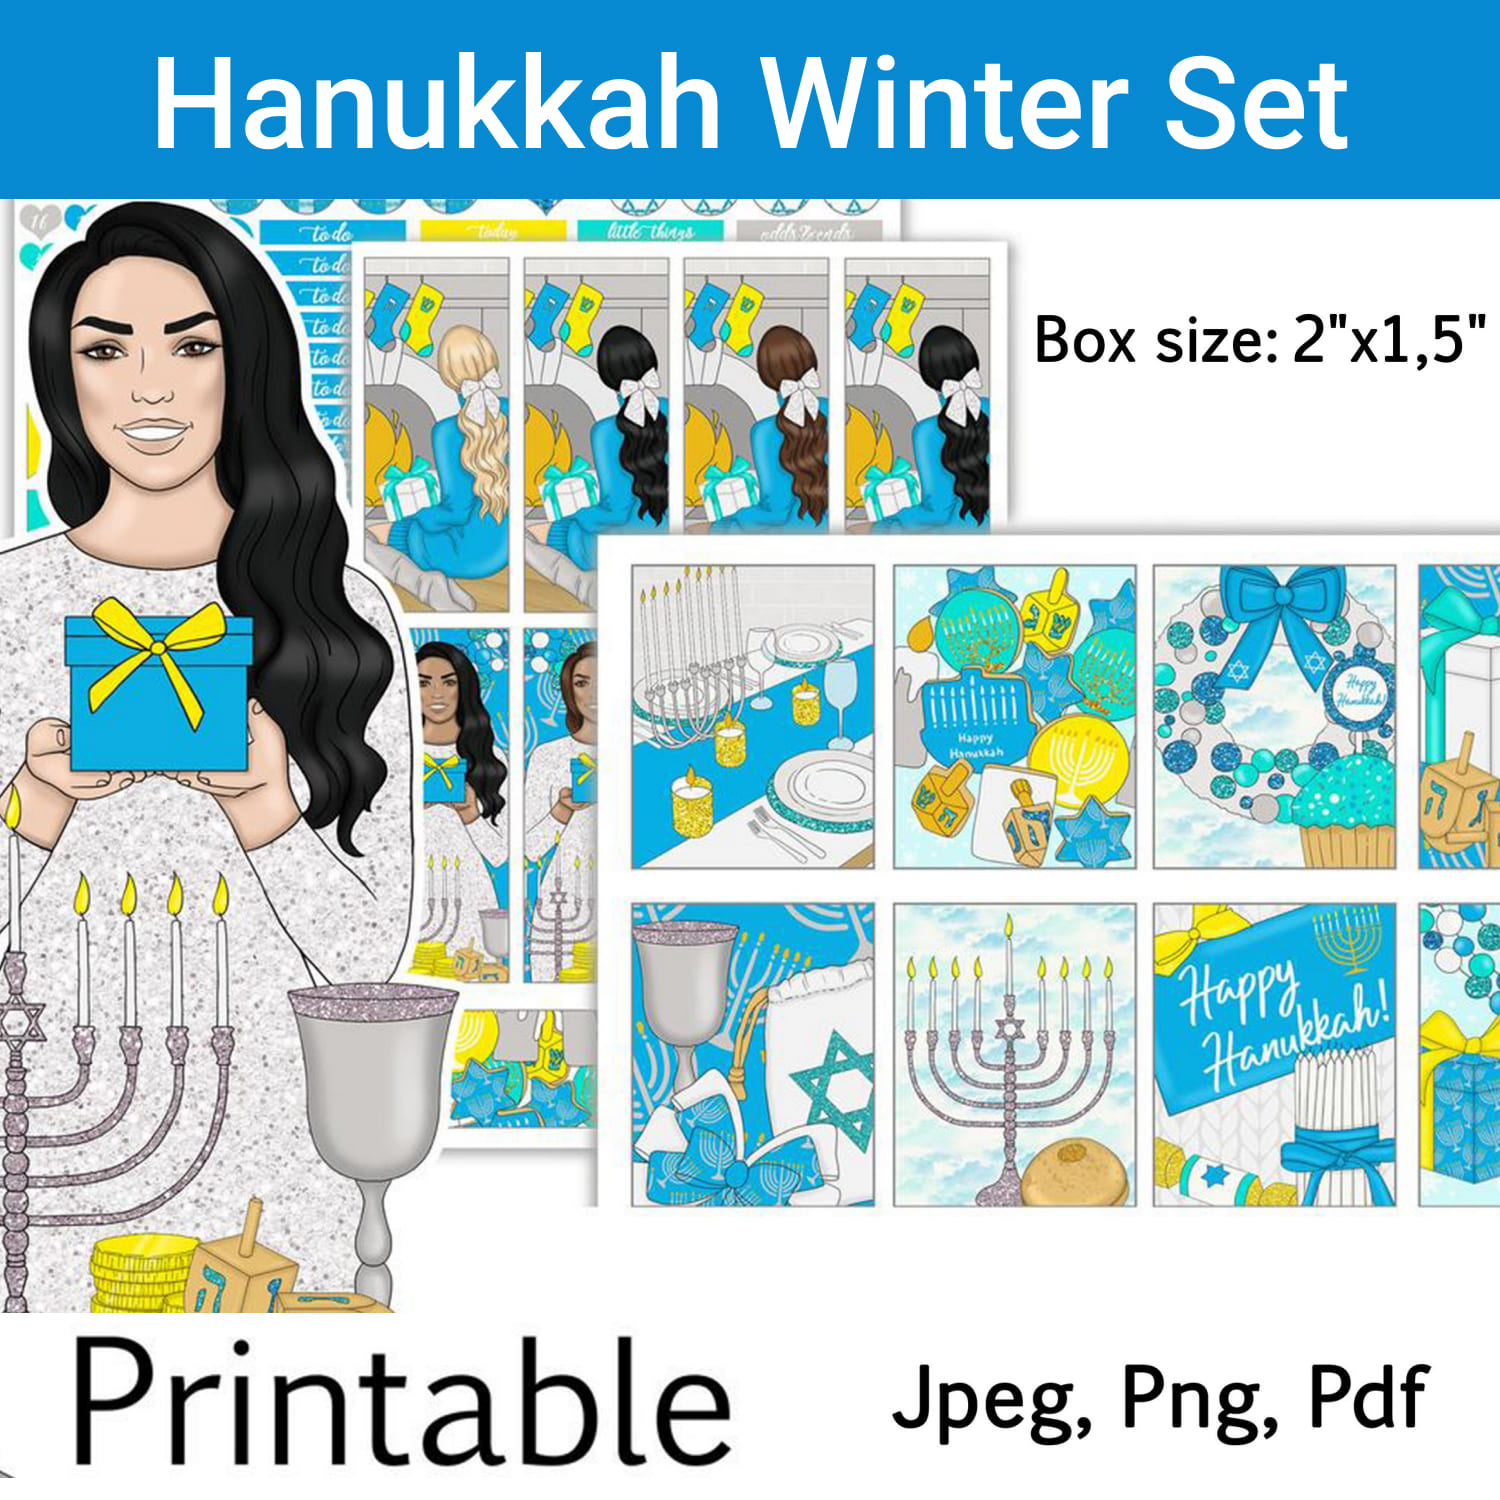 Prints of hanukkah winter set.